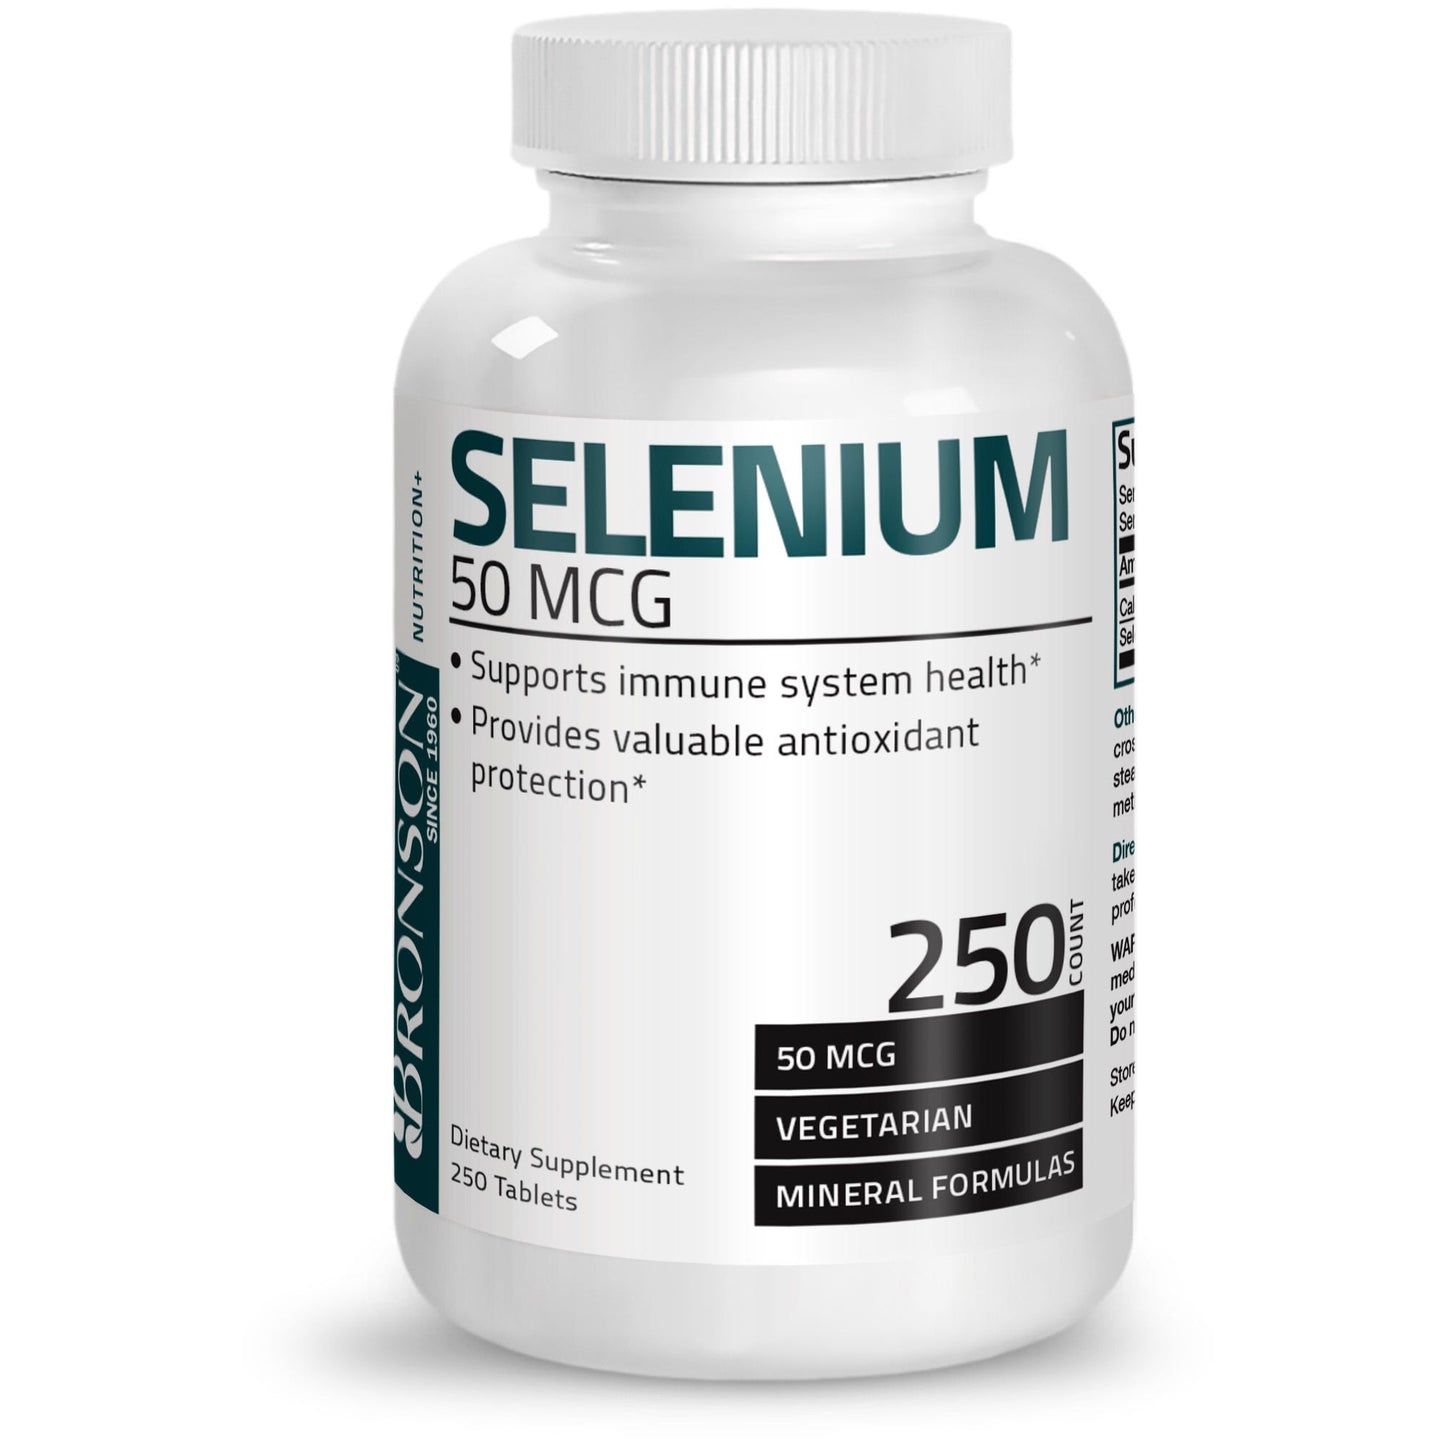 Selenium - 50 mcg - 250 Tablets